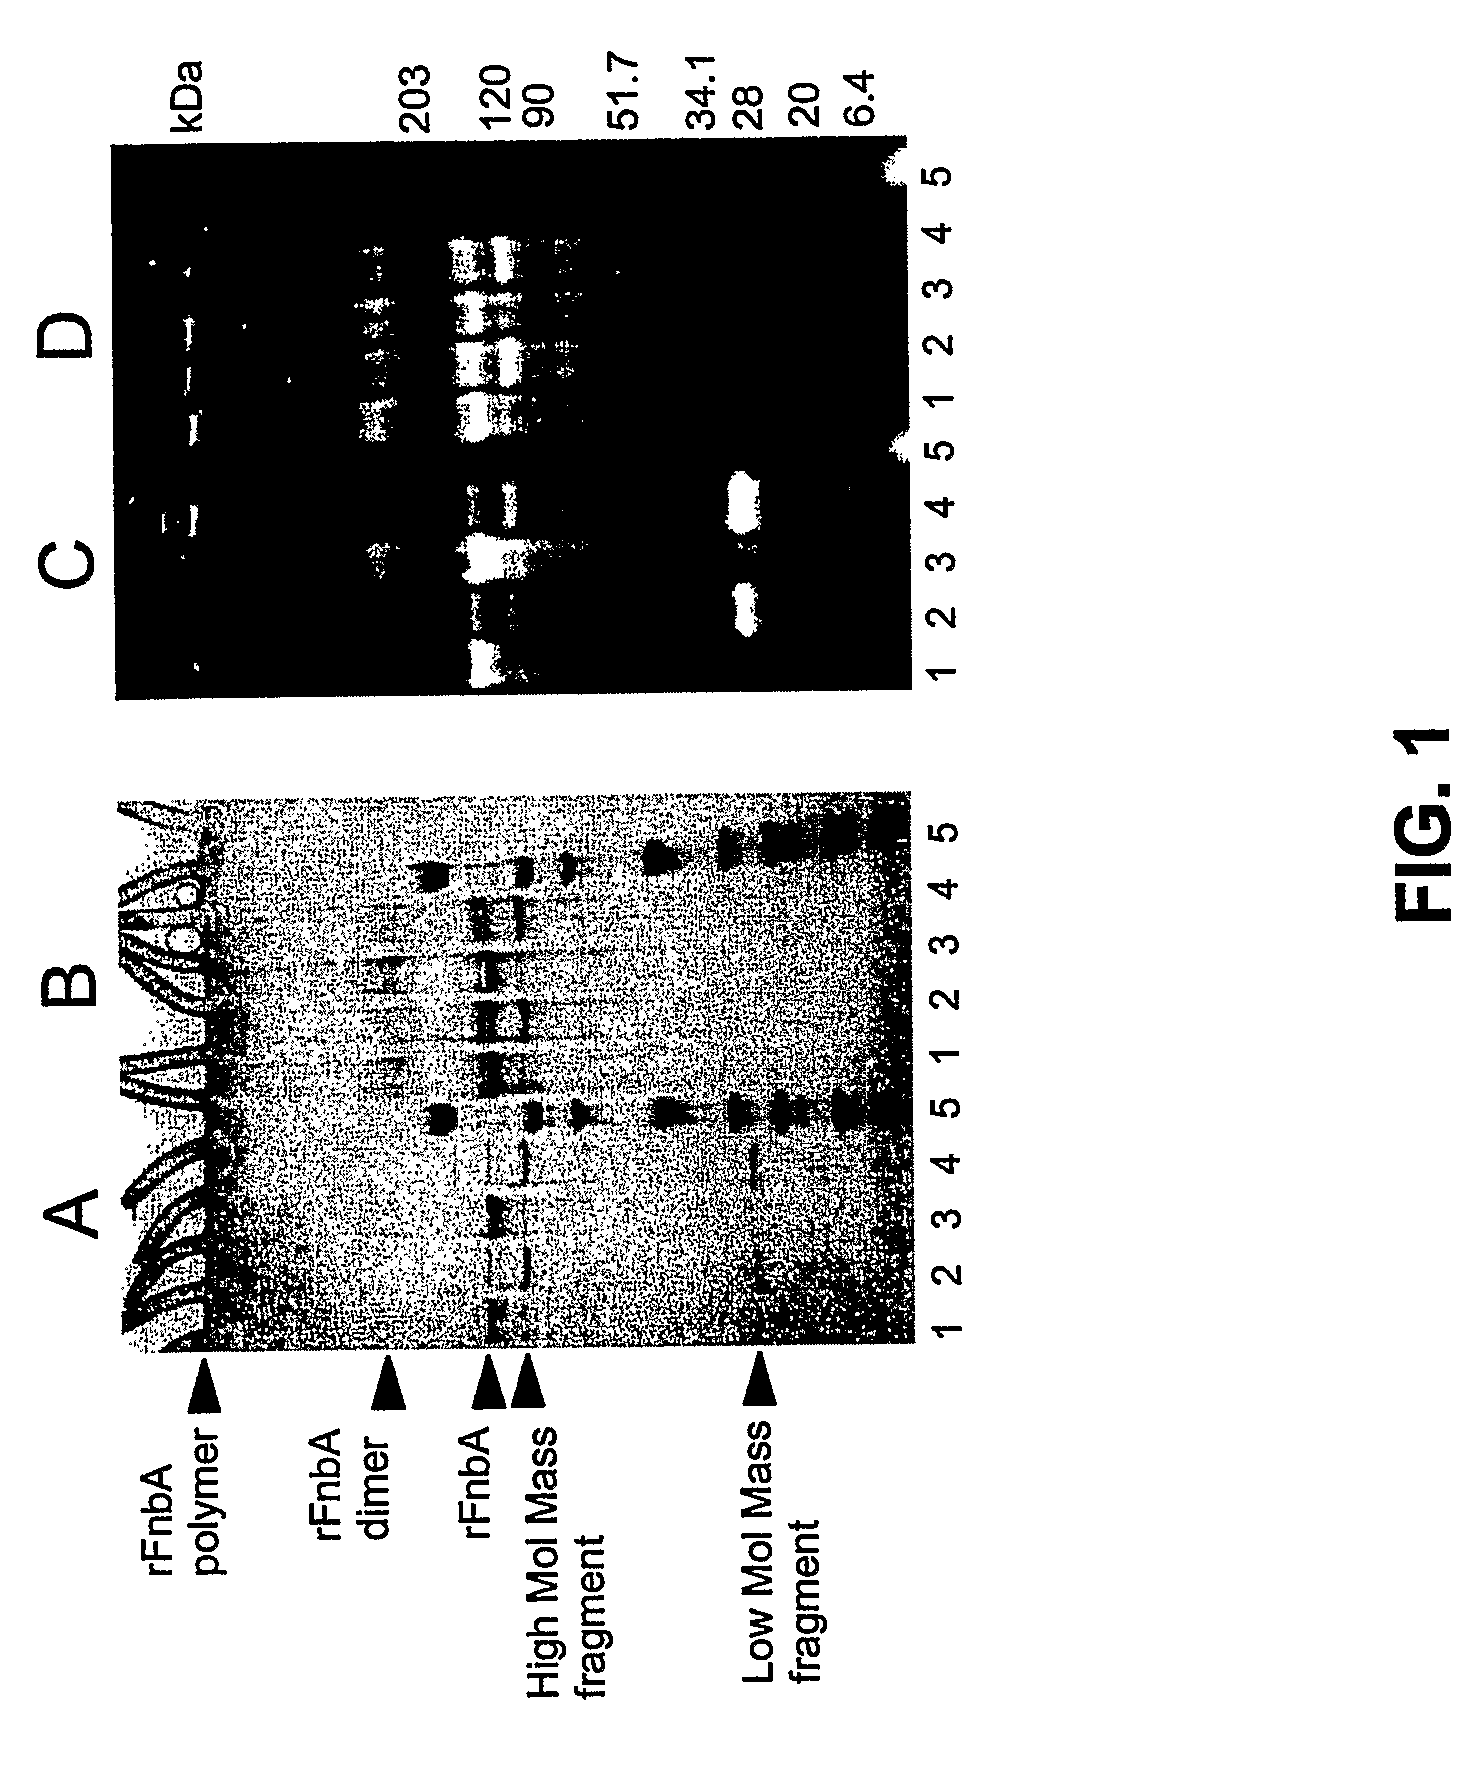 Altered fibronectin-binding protein of Staphylococcus aureus